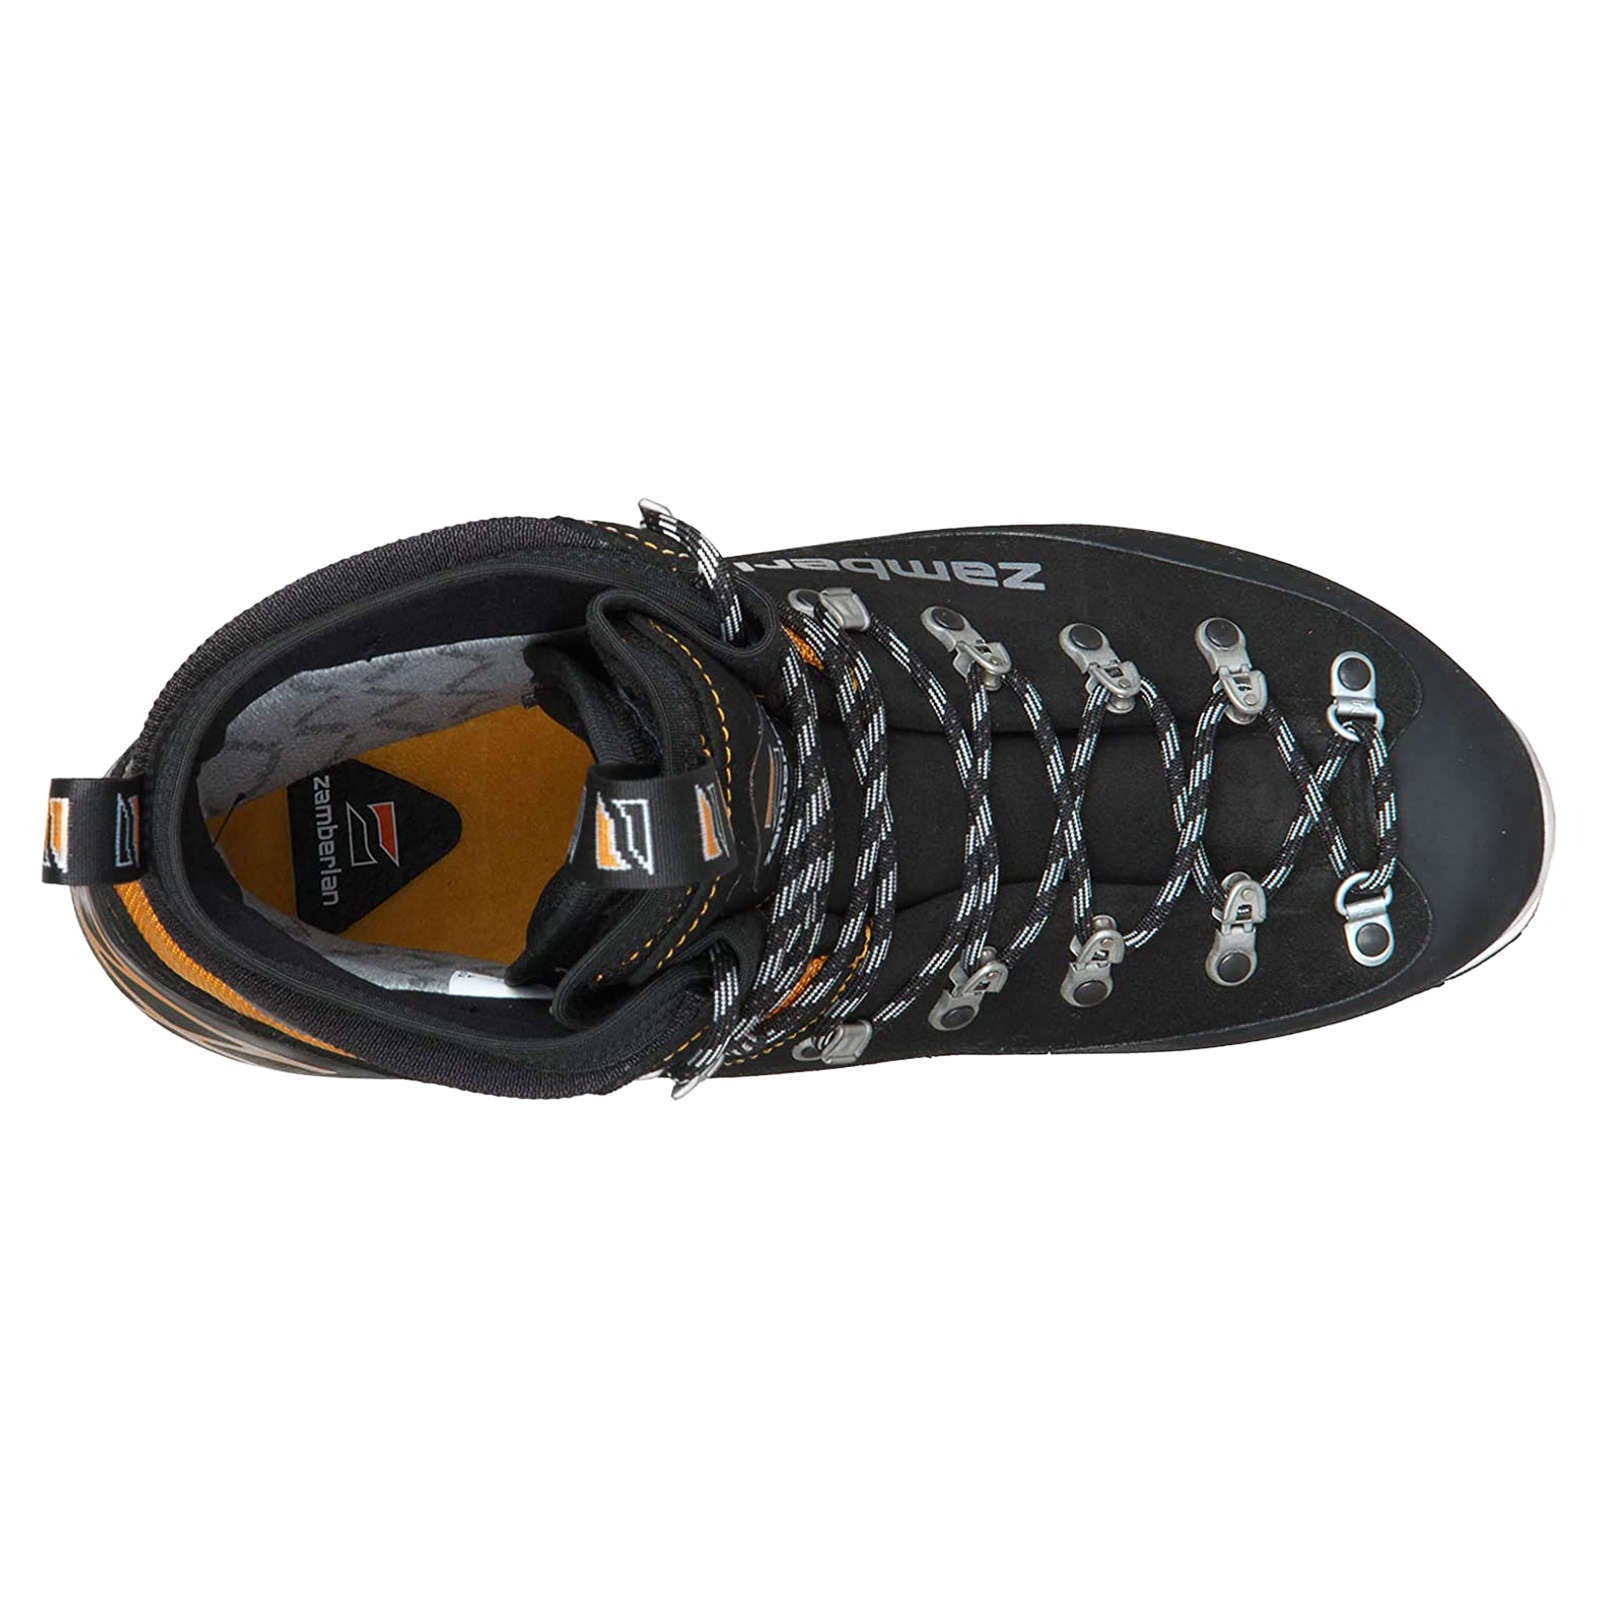 Zamberlan 2090 Mountain Pro Evo GTX RR Leather Men's Mountaineering Boots#color_black orange